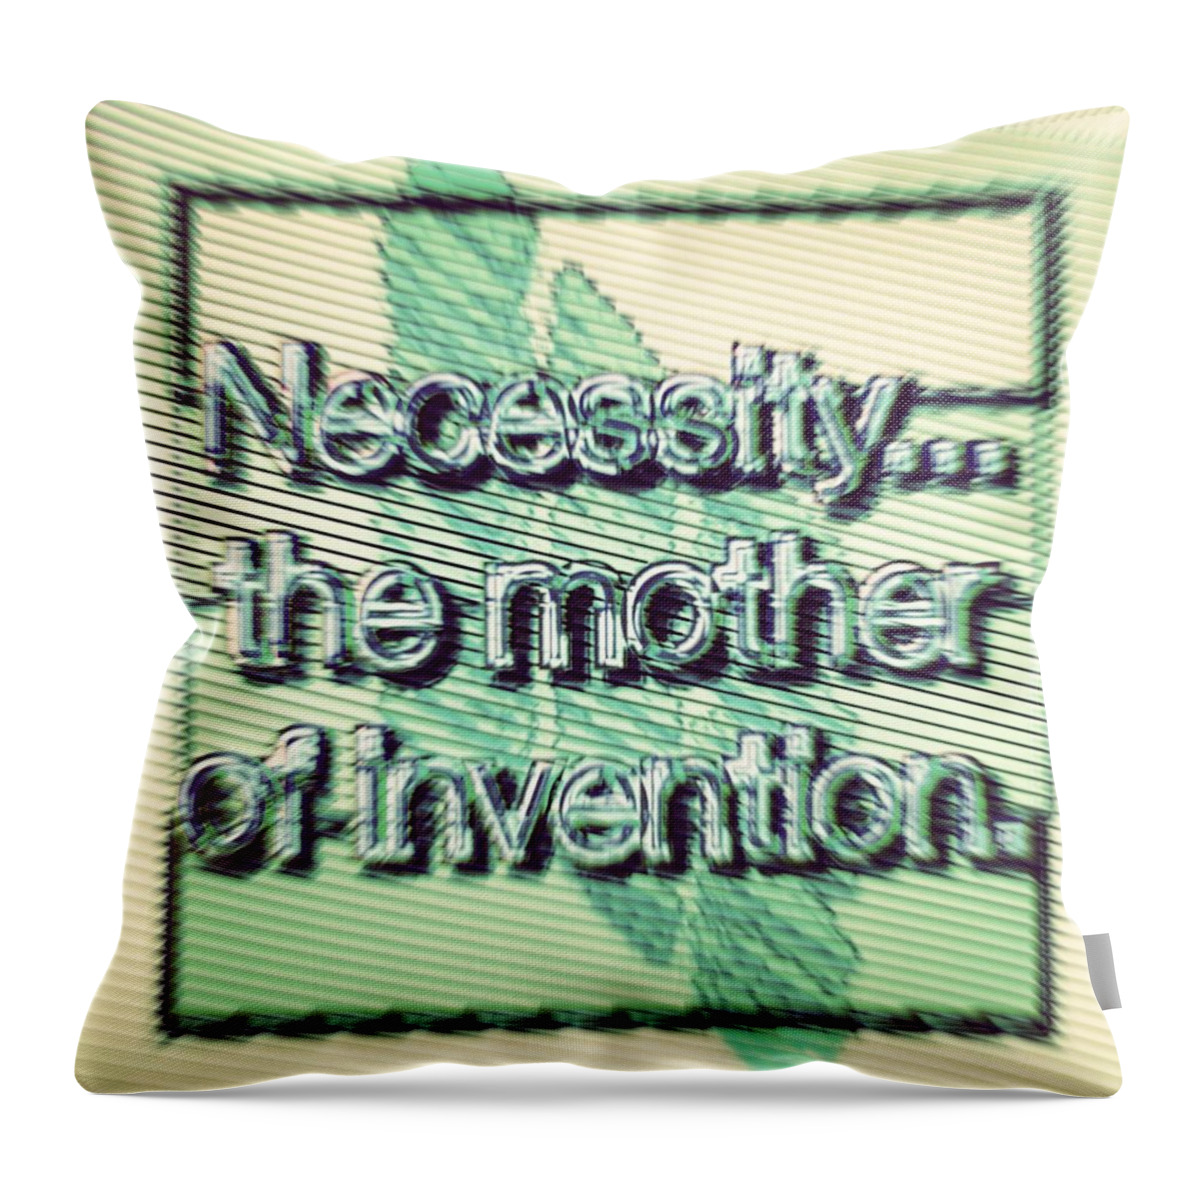 Necessity Throw Pillow featuring the digital art Necessity... by Marko Sabotin